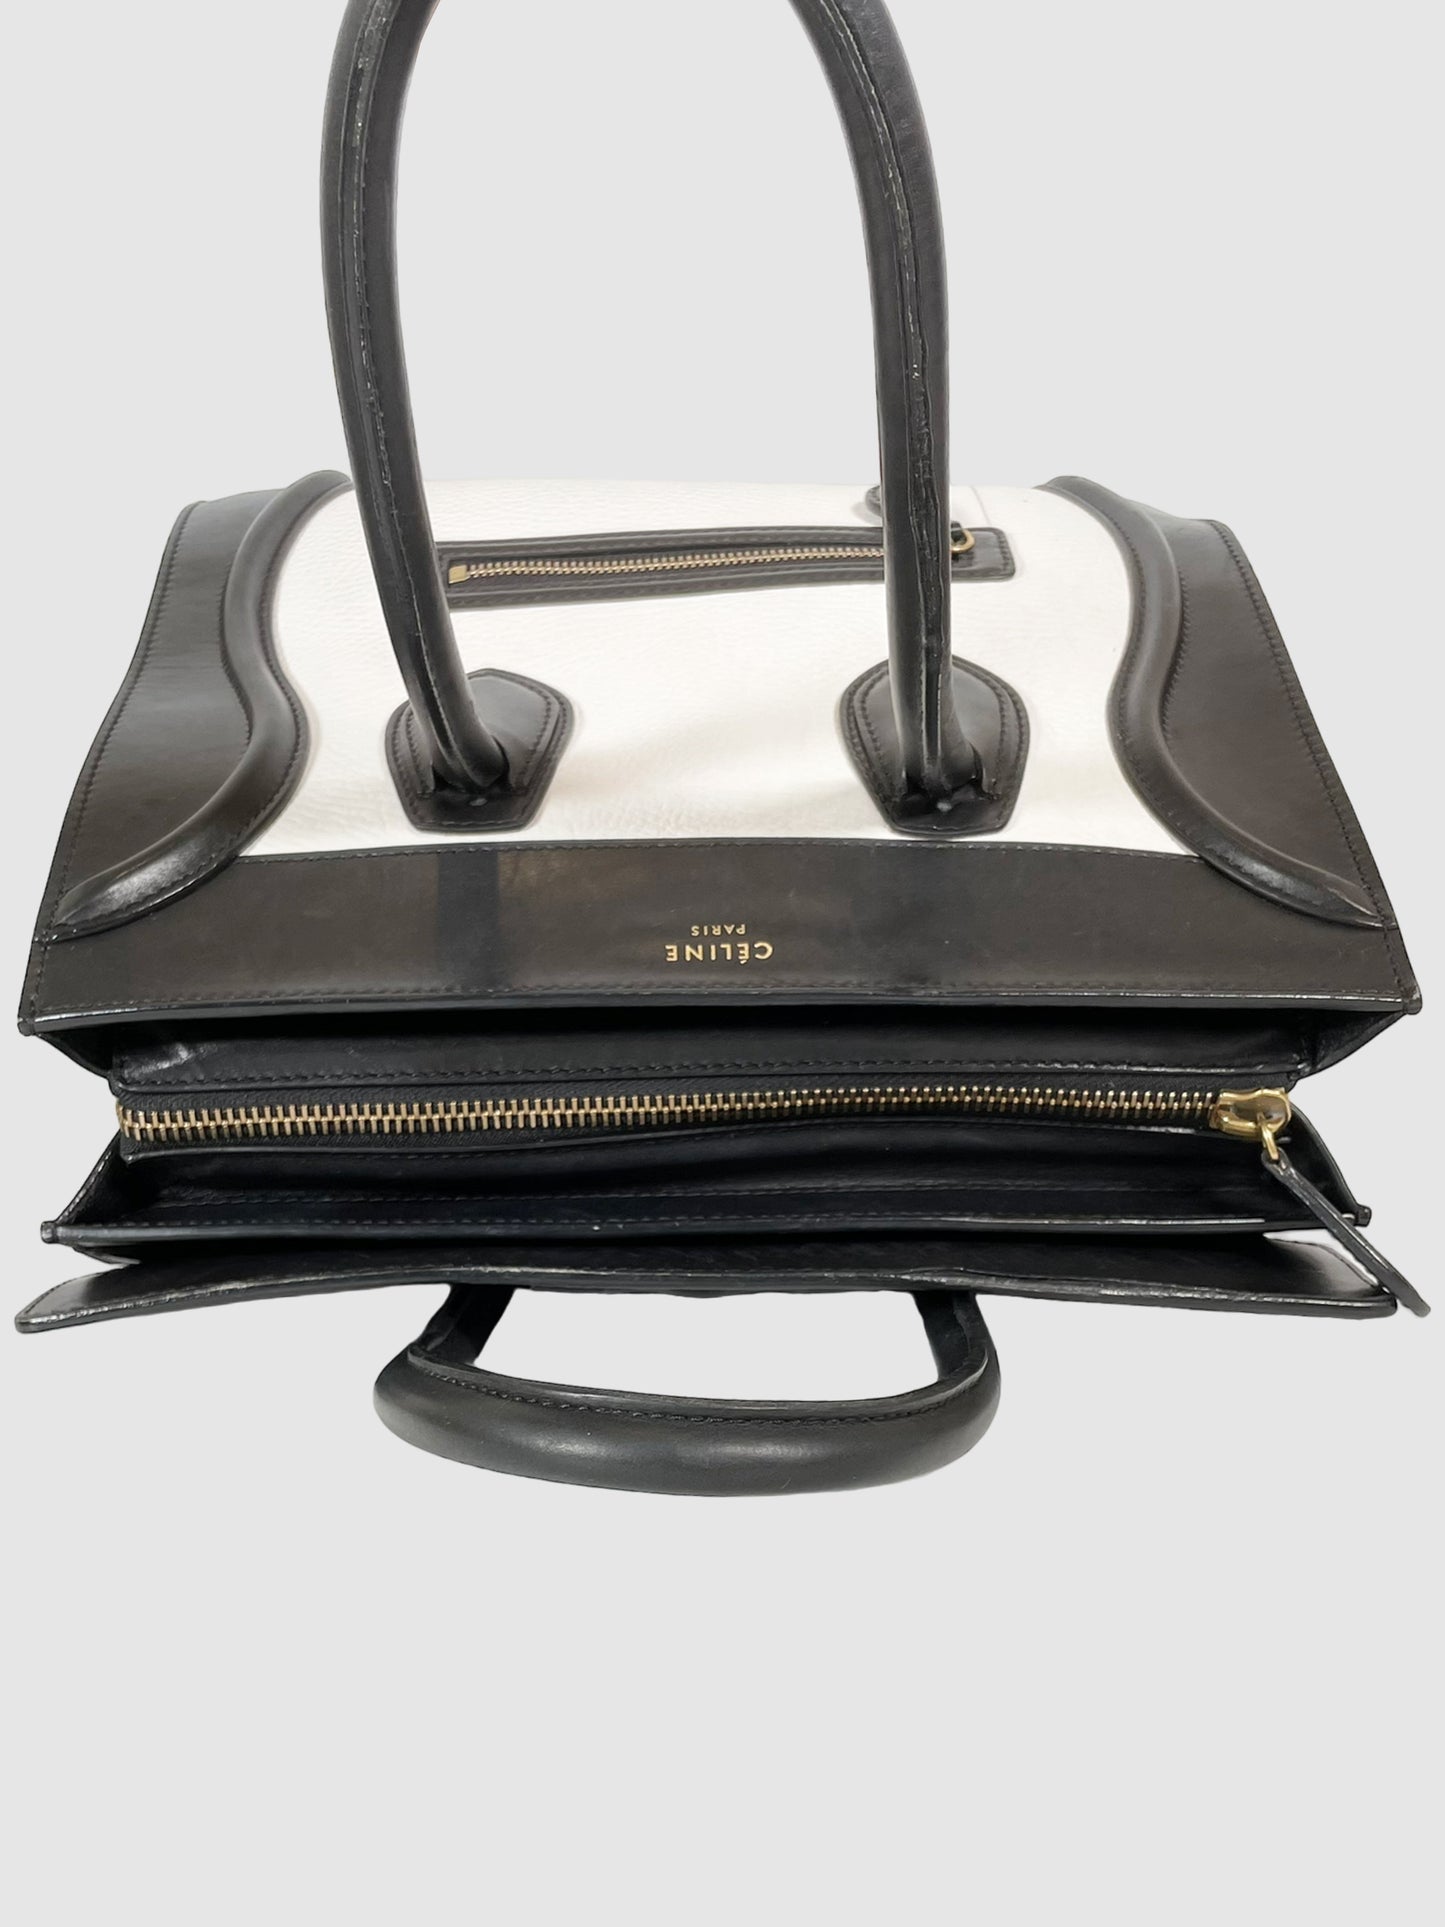 Celine Black & White Medium Luggage Bag